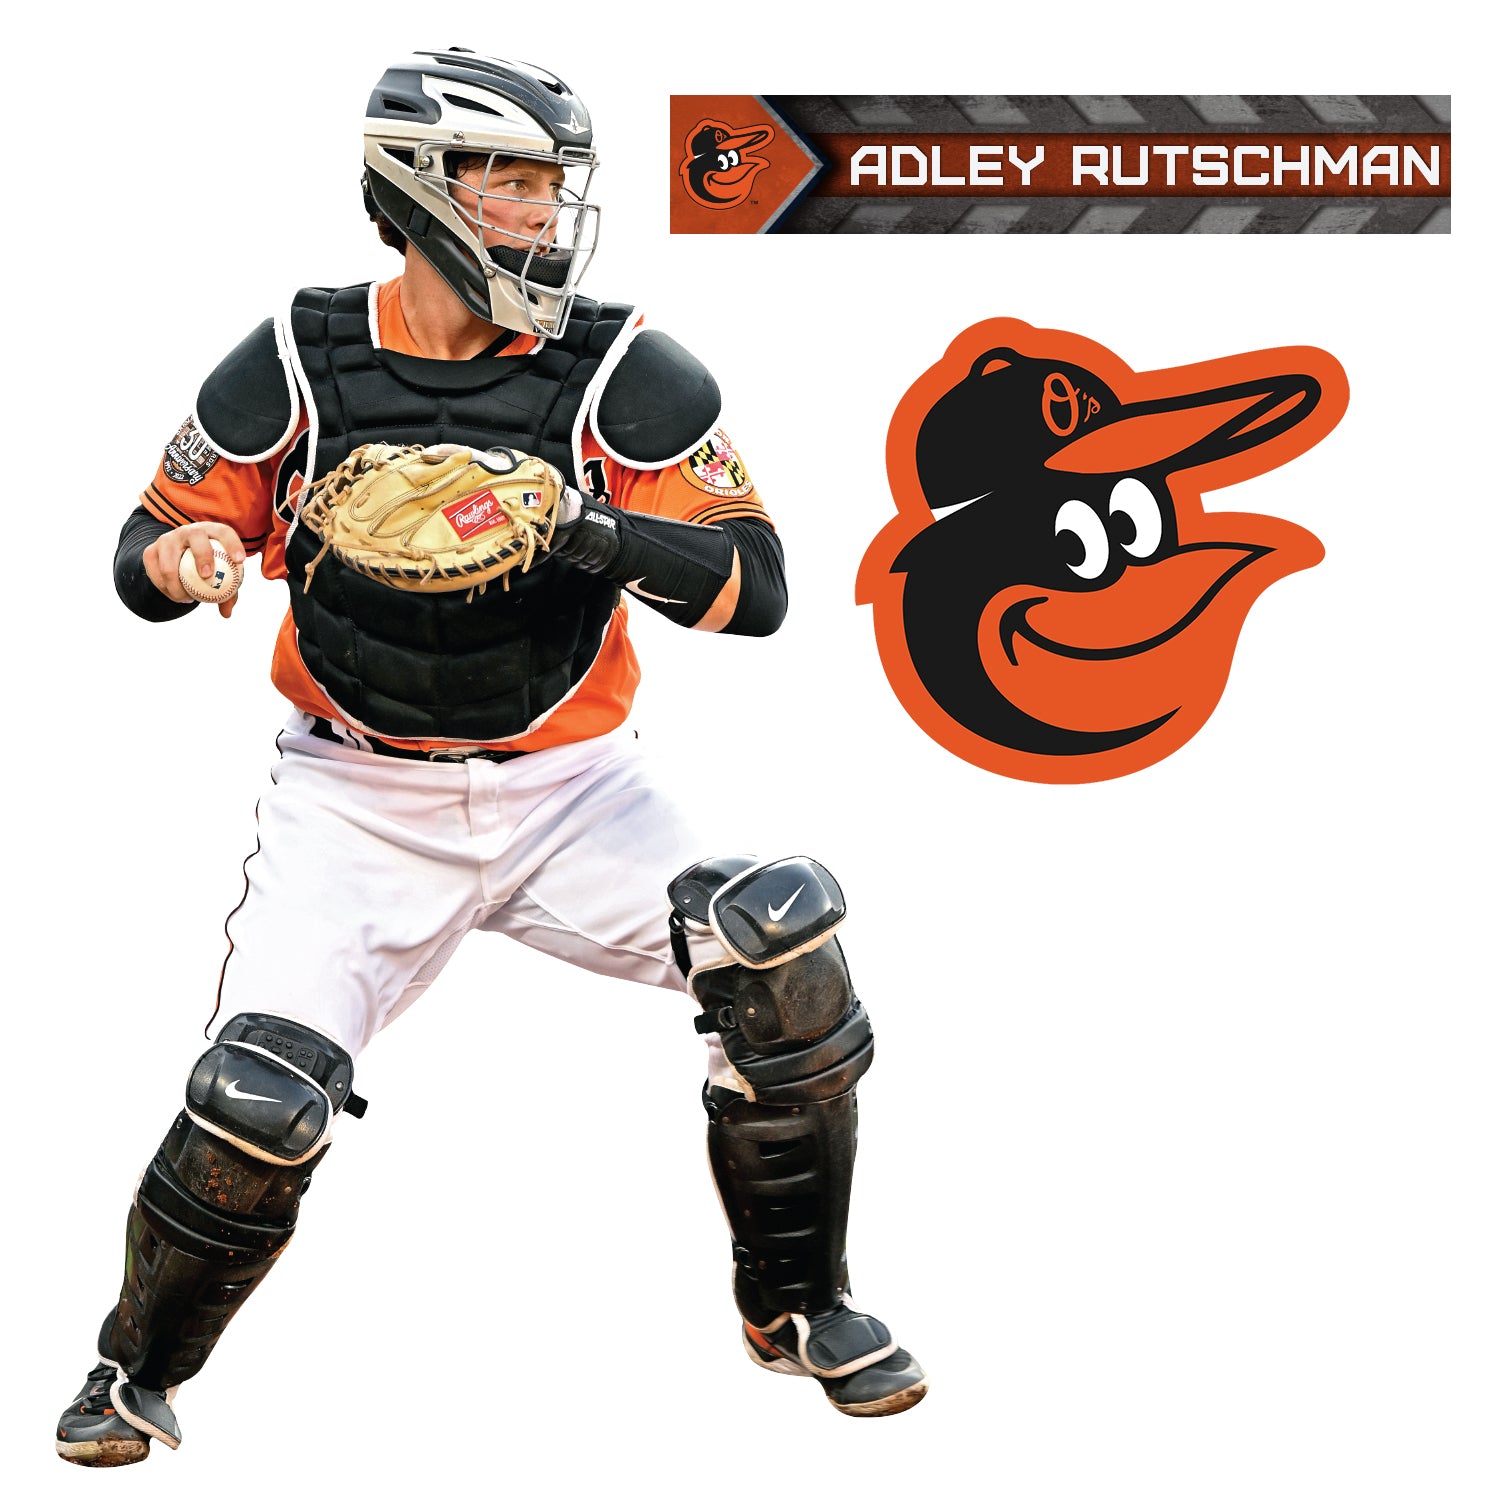 Baltimore Orioles: Adley Rutschman 2022 Catcher - Officially Licensed